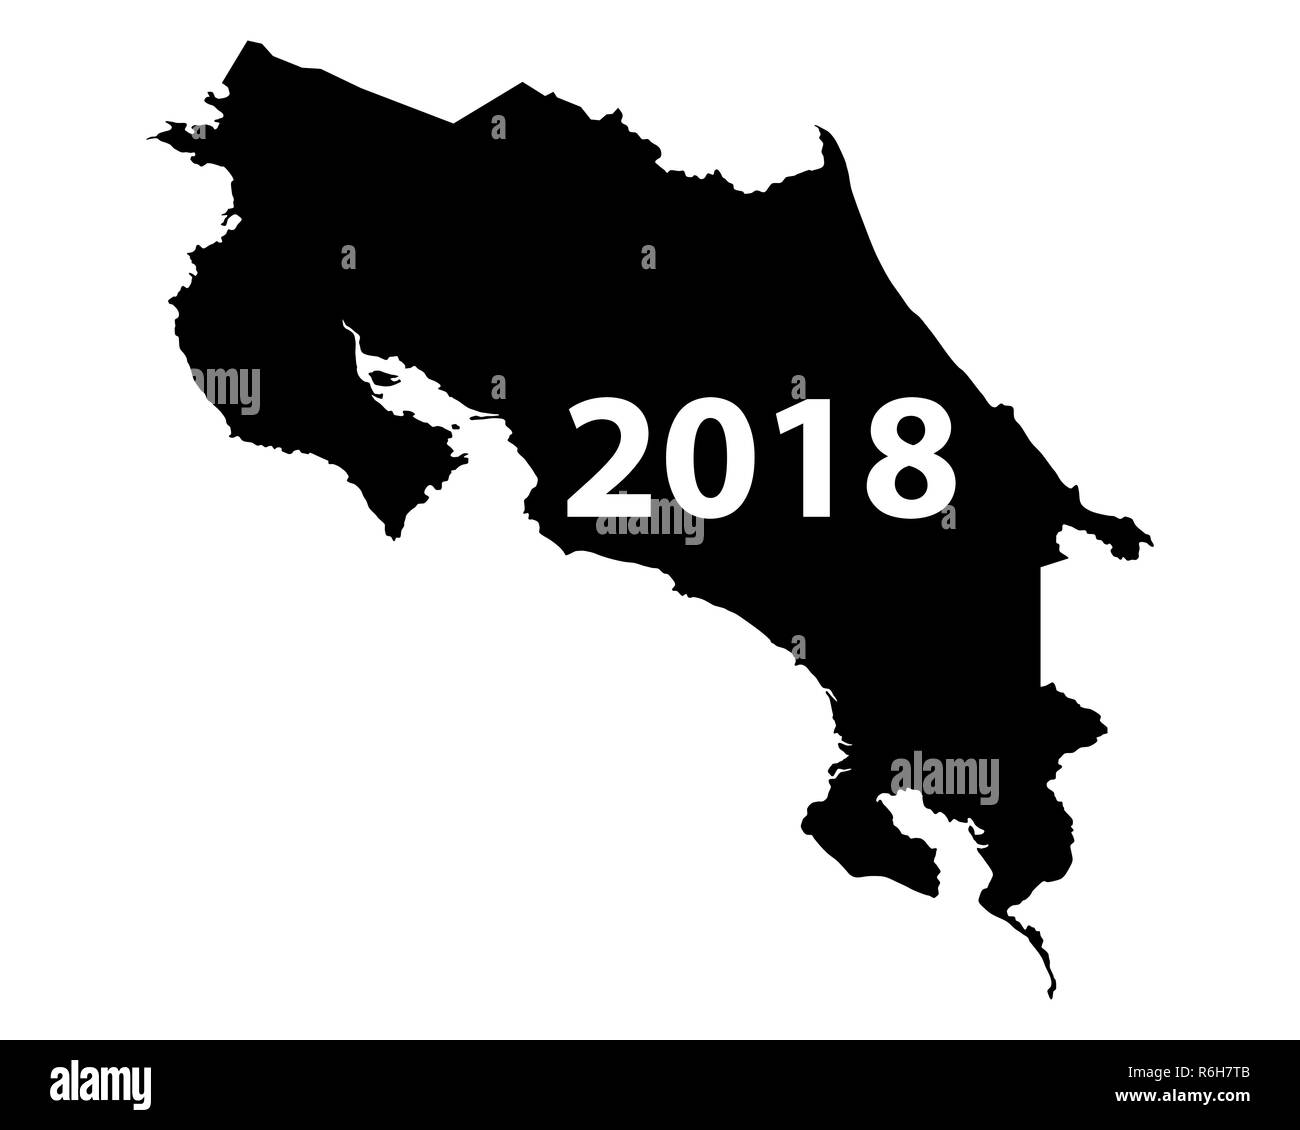 map of costa rica 2018 Stock Photo